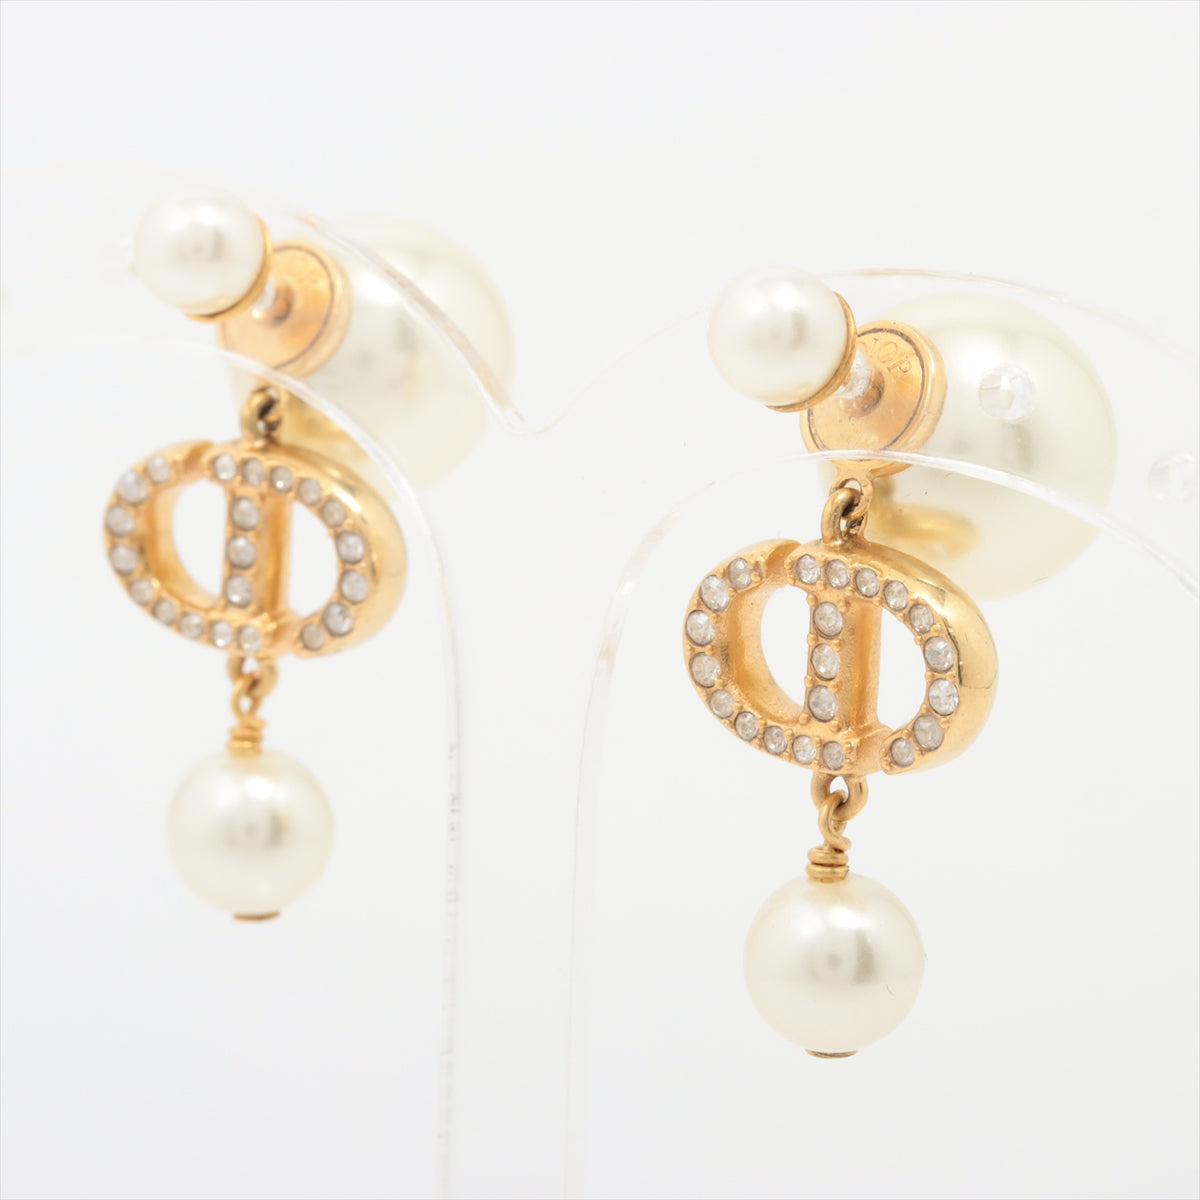 Dior CD Navy CD navy Earrings (For Both Ears) GP x rhinestone x imitation pearl Gold